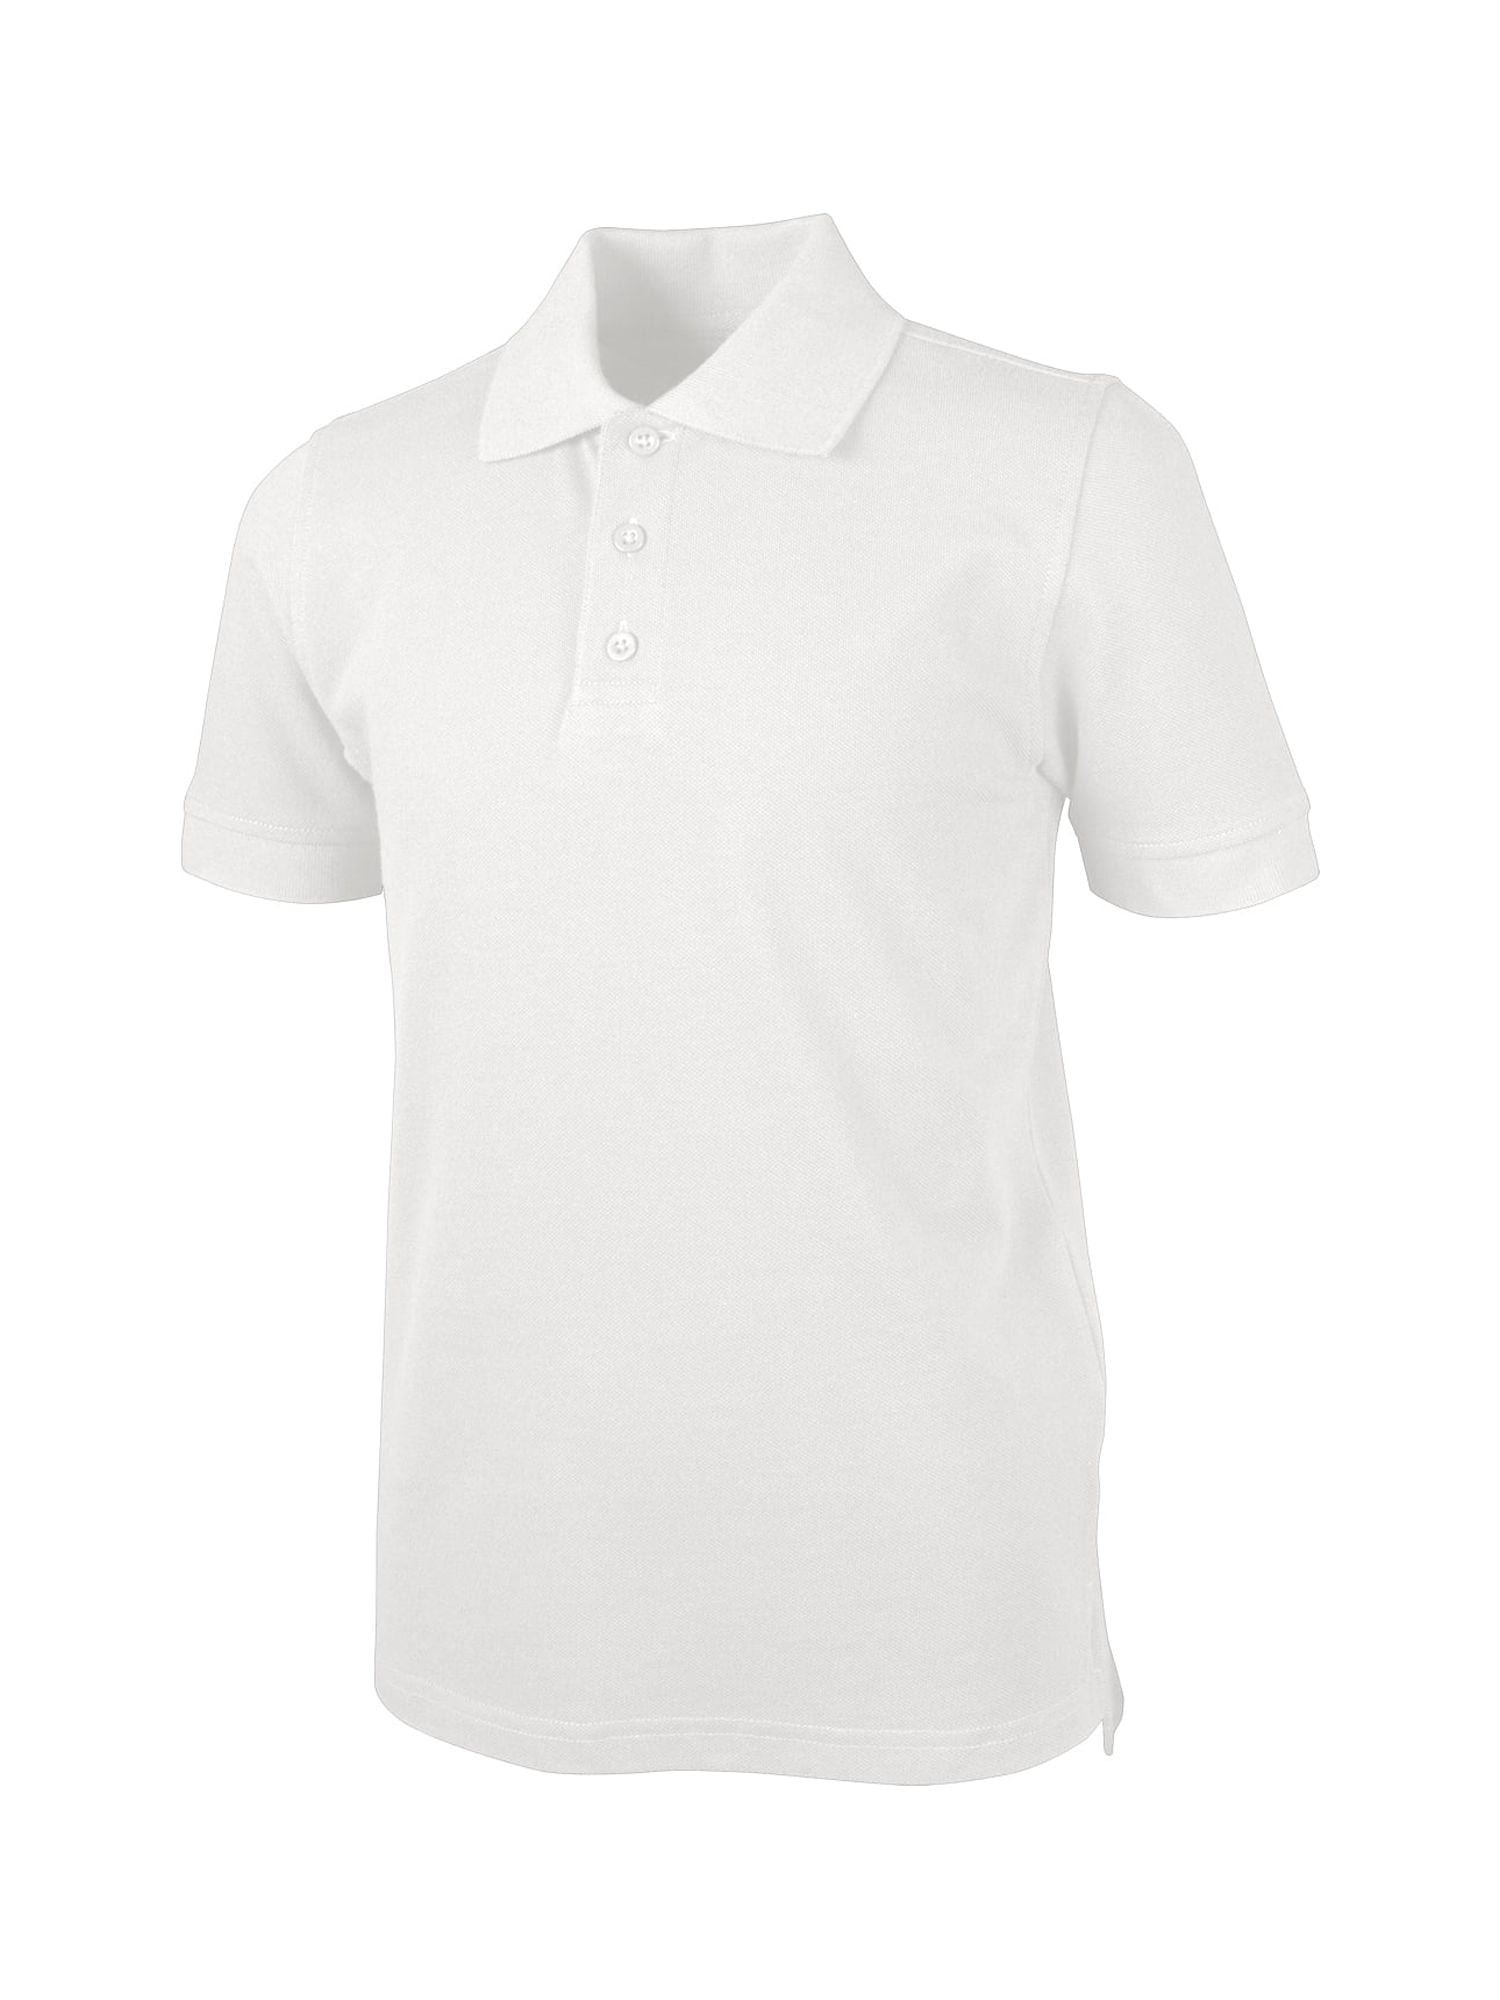 Real School Unisex School Uniform Short Sleeve Pique Polo Shirt, Sizes ...